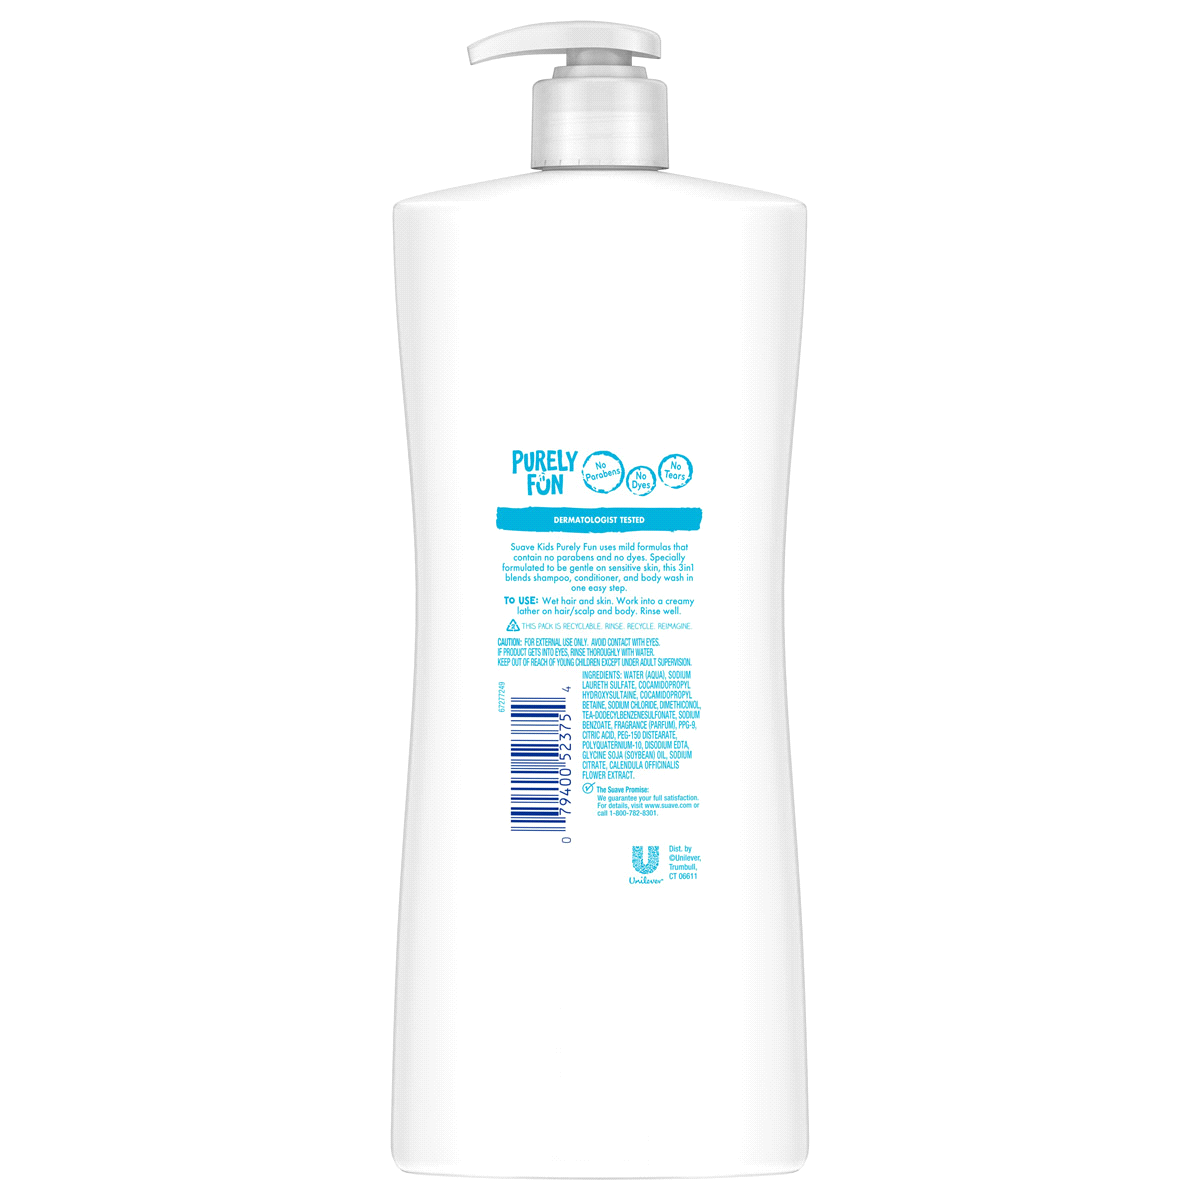 Suave Kids 3in1 Shampoo + Conditioner + Body Wash Purely Fun Sensitive 828ml White - Baby Moo